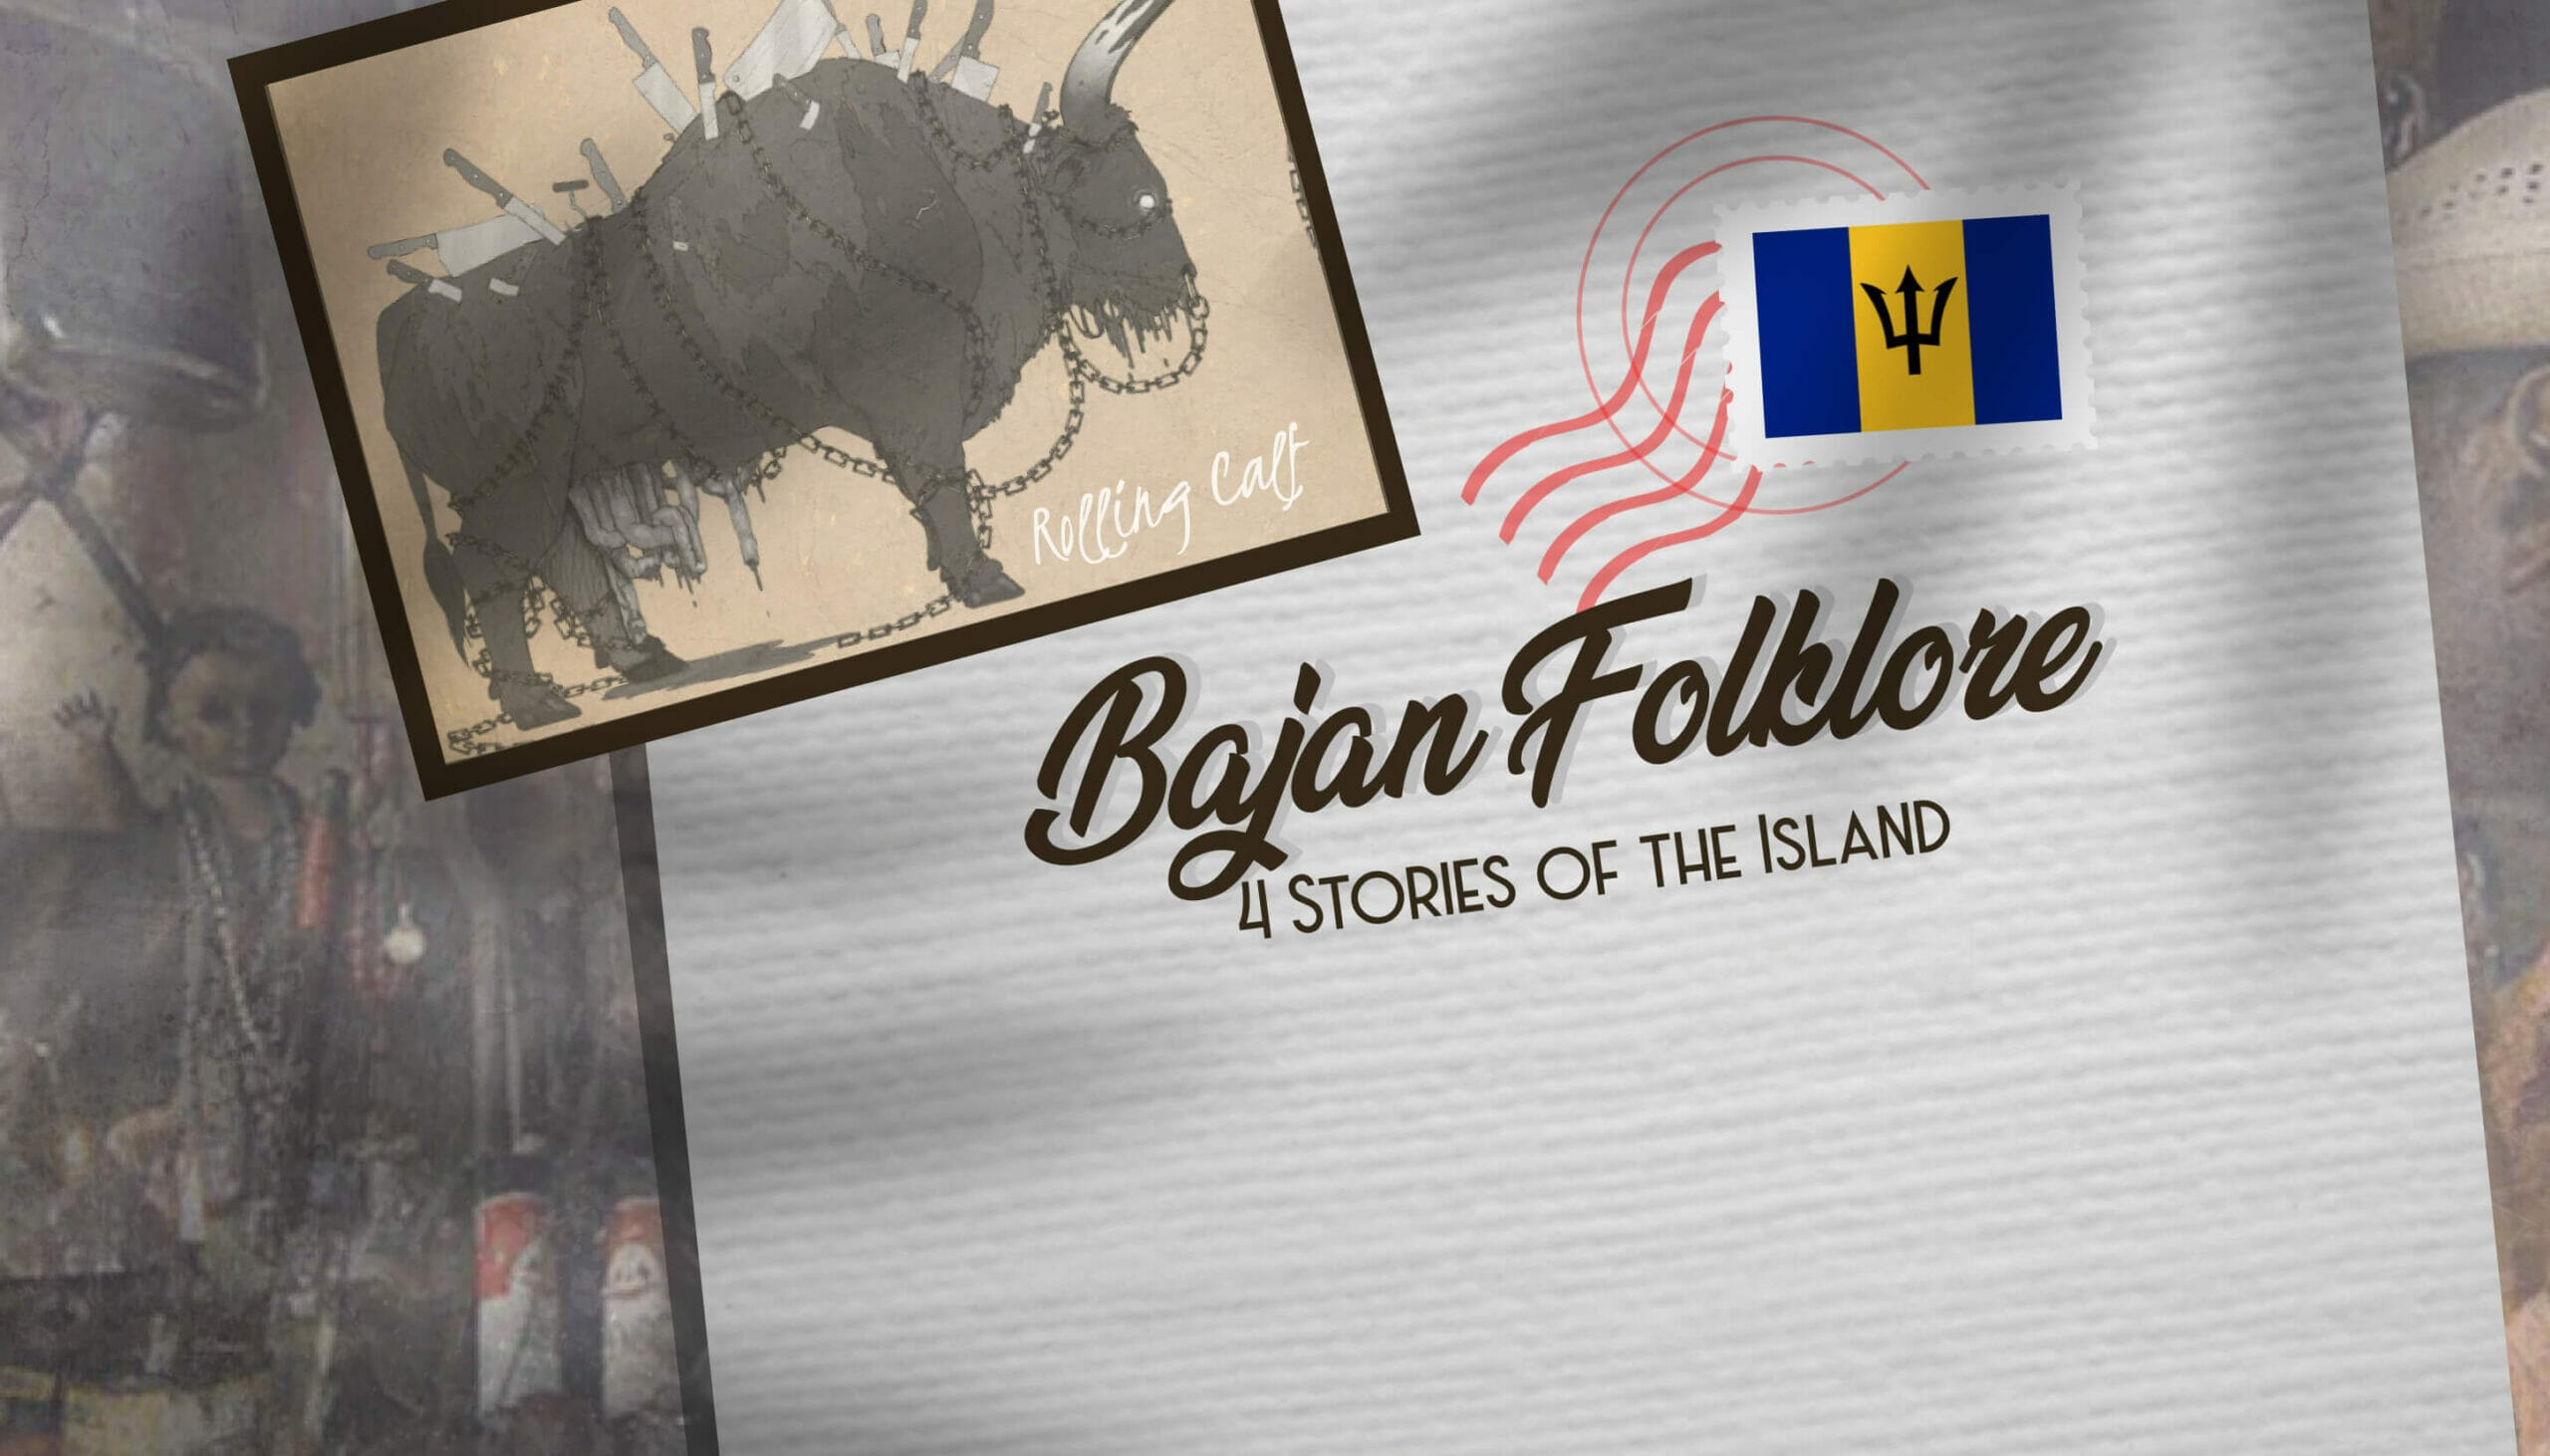 Bajan Folklore 4 Stories of the Island